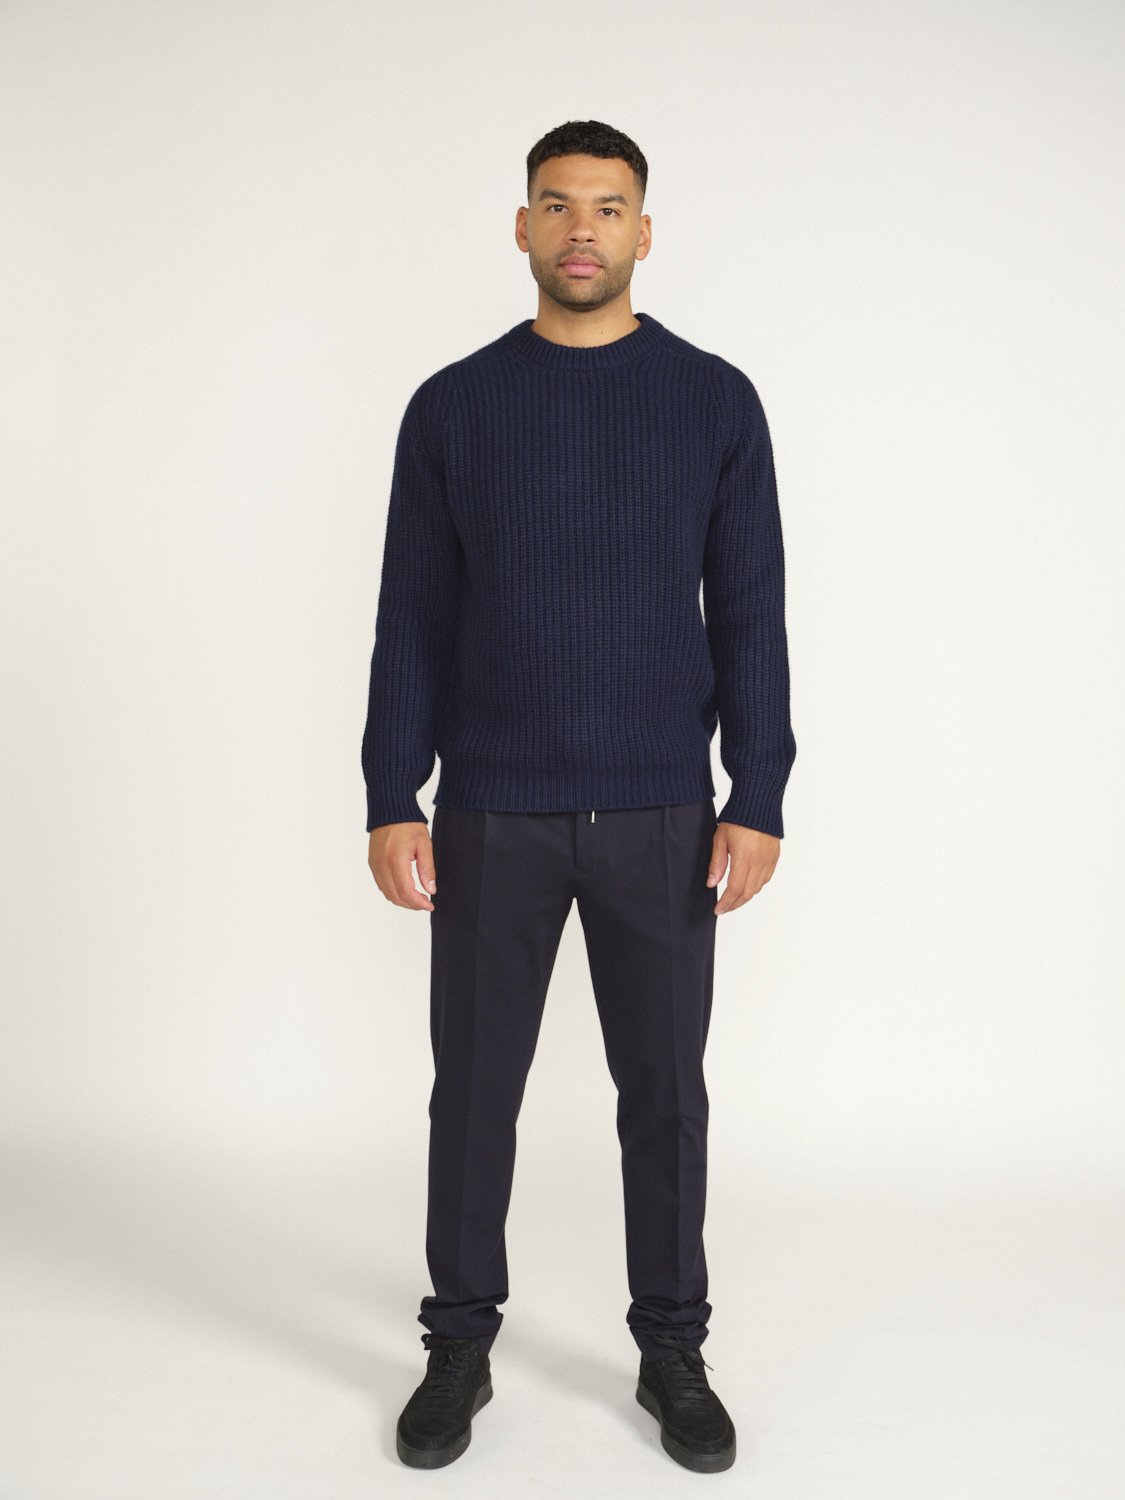 Stephan Boya Mood Rib Sweater - Pull en maille côtelée blau M